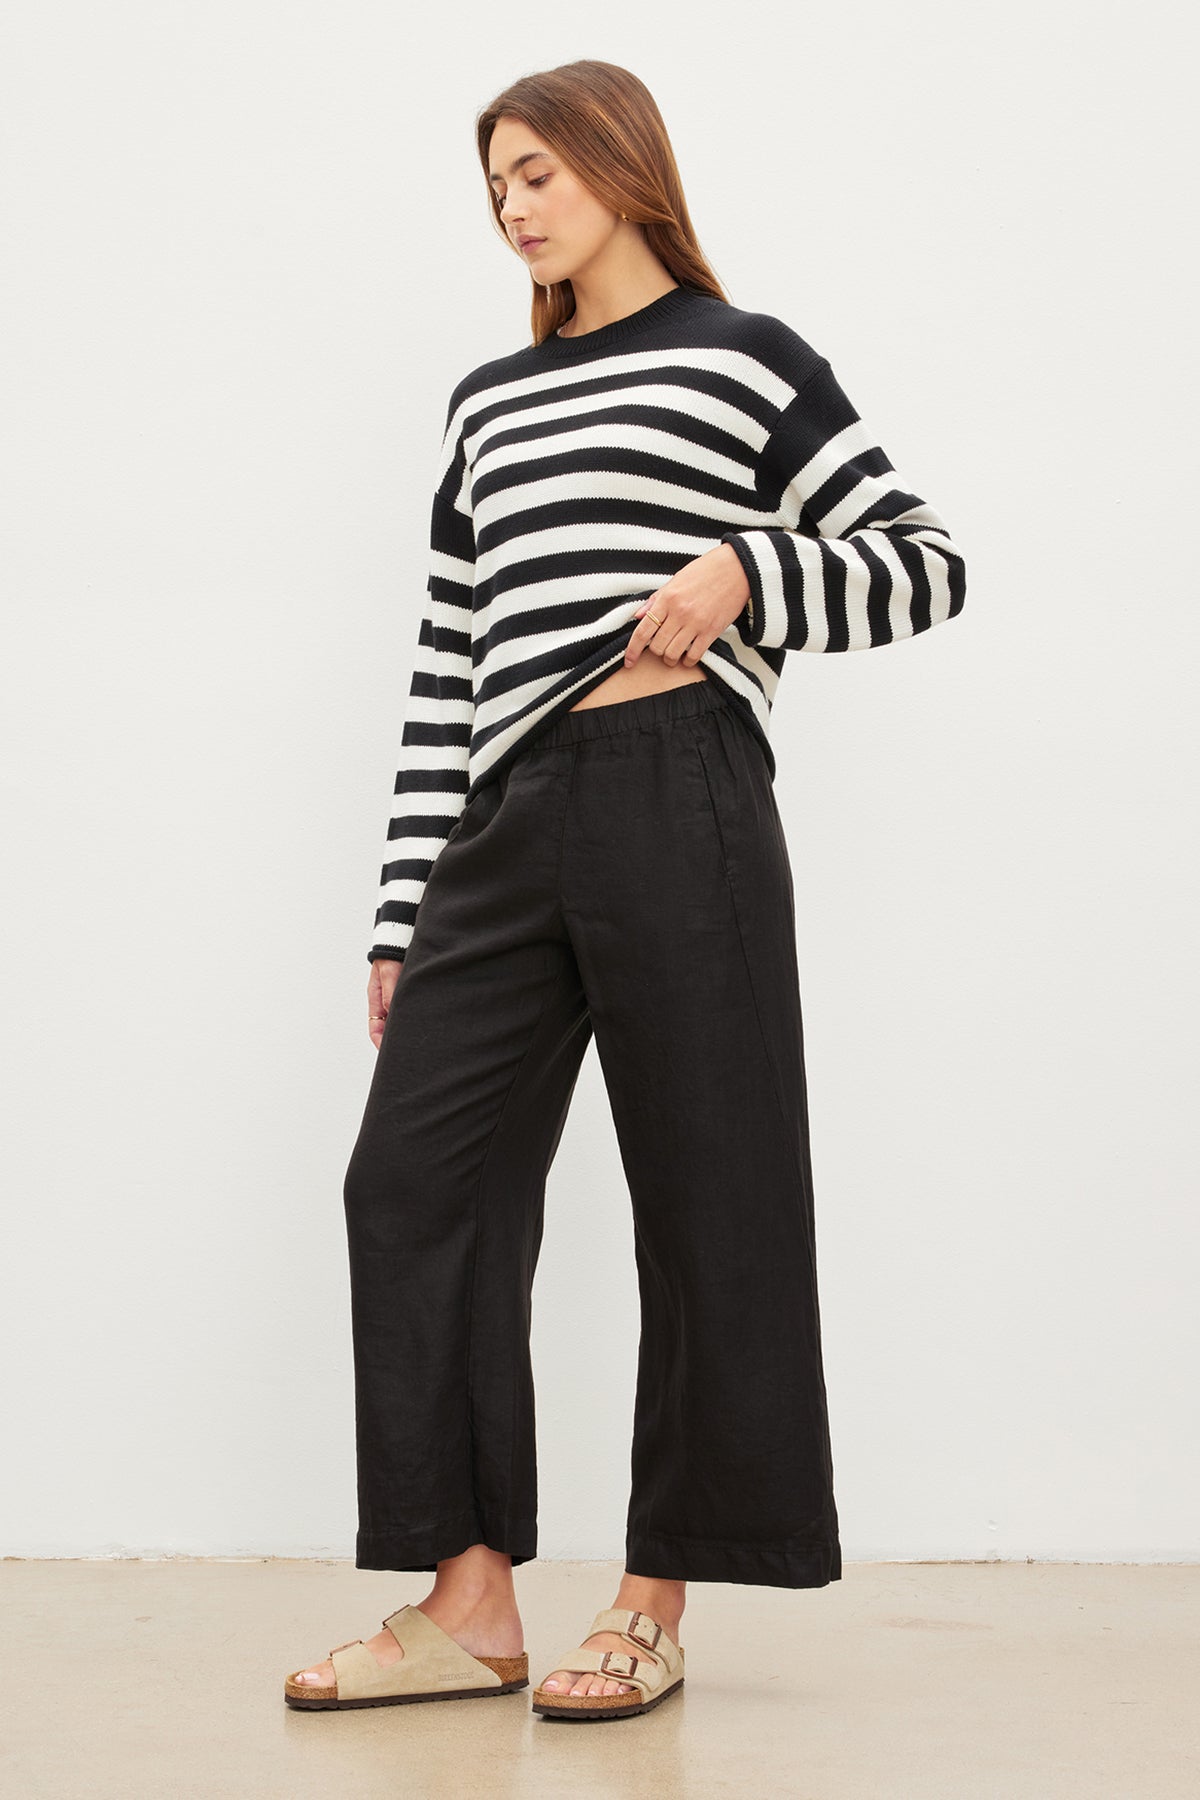 The model is wearing Velvet by Graham & Spencer LOLA LINEN PANT, lightweight wide leg pants with an elastic waist.-36002720415937